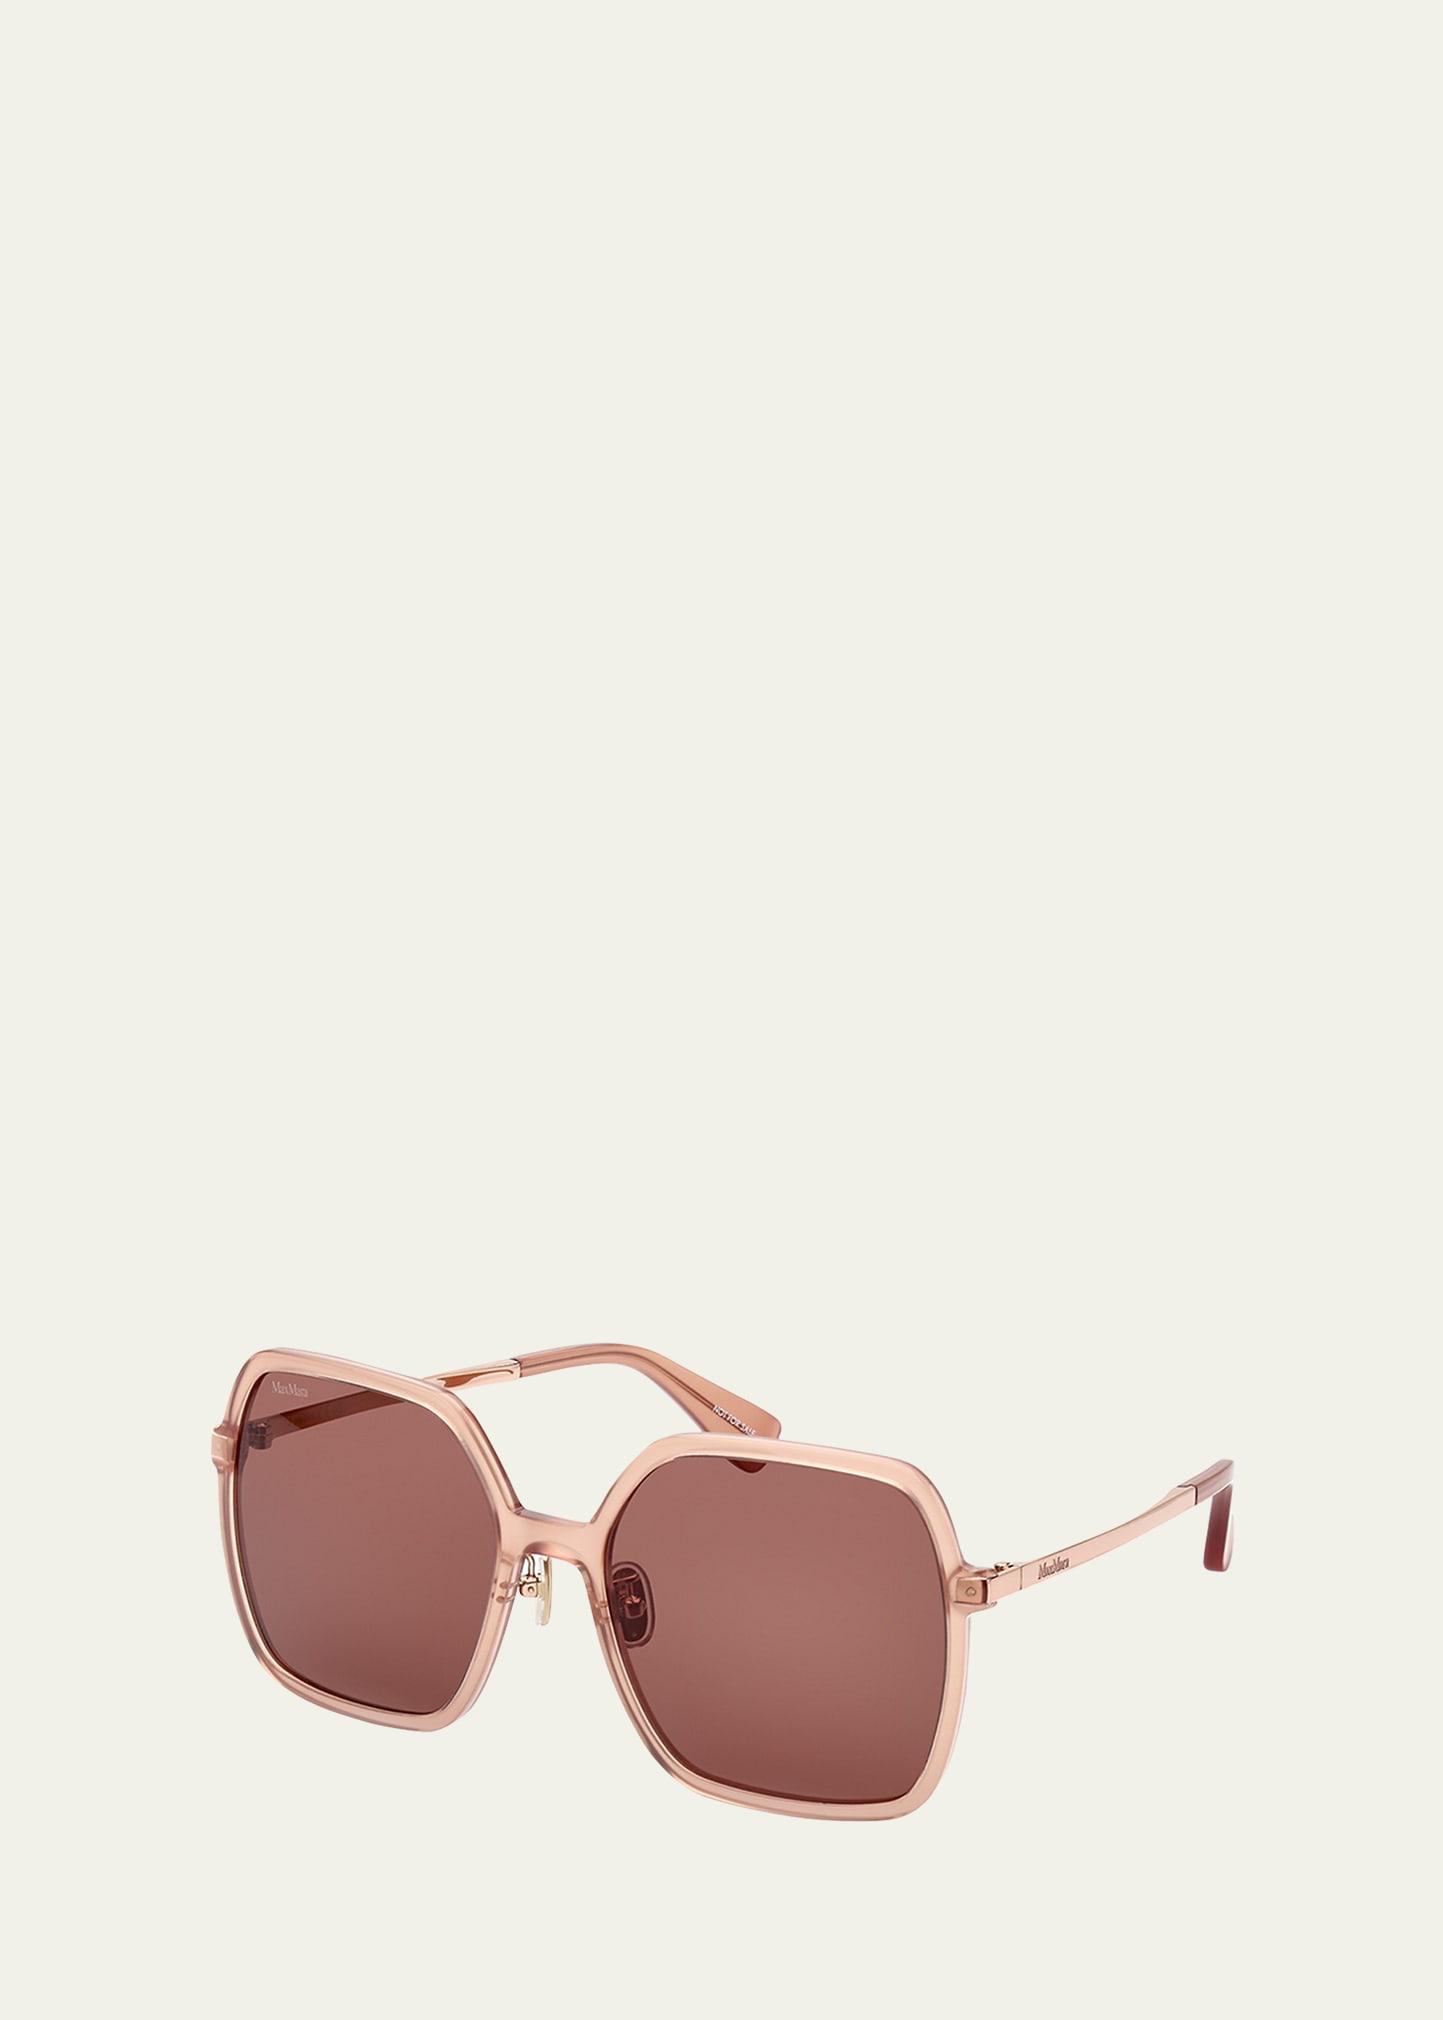 Max Mara 59mm Square Sunglasses Product Image